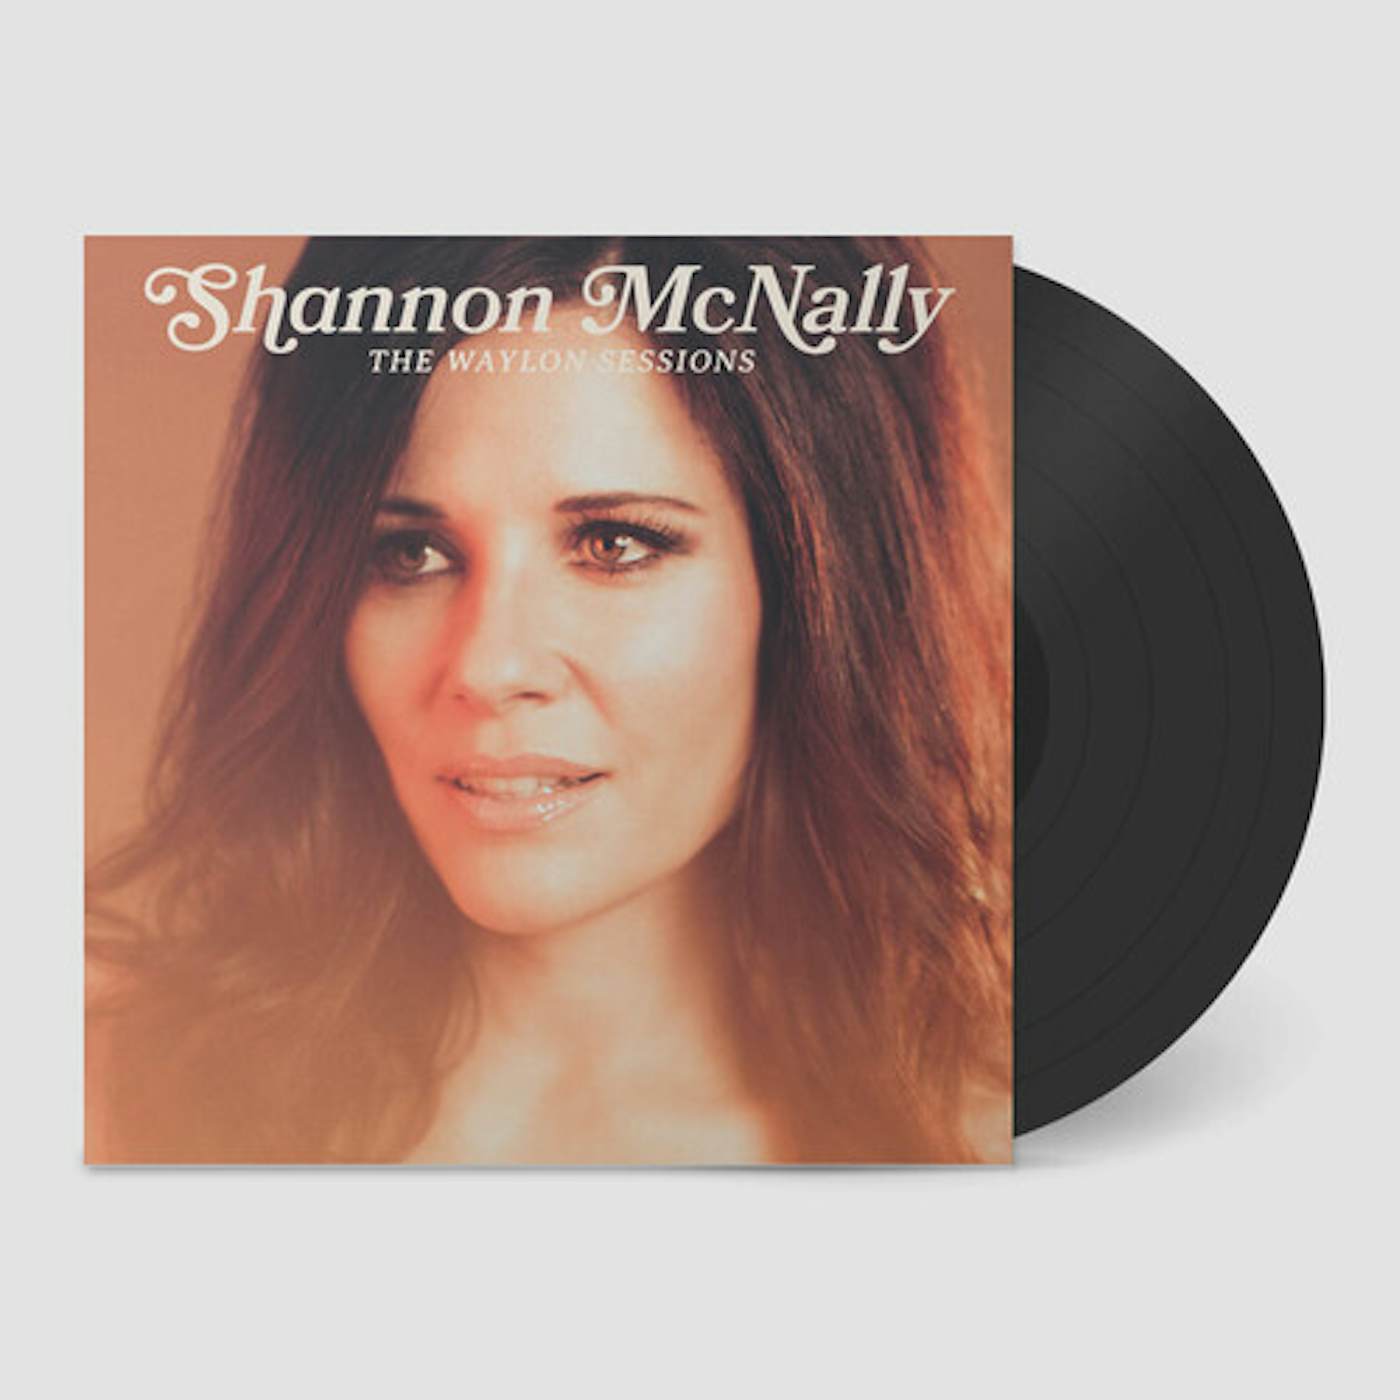 Shannon McNally WAYLON SESSIONS Vinyl Record